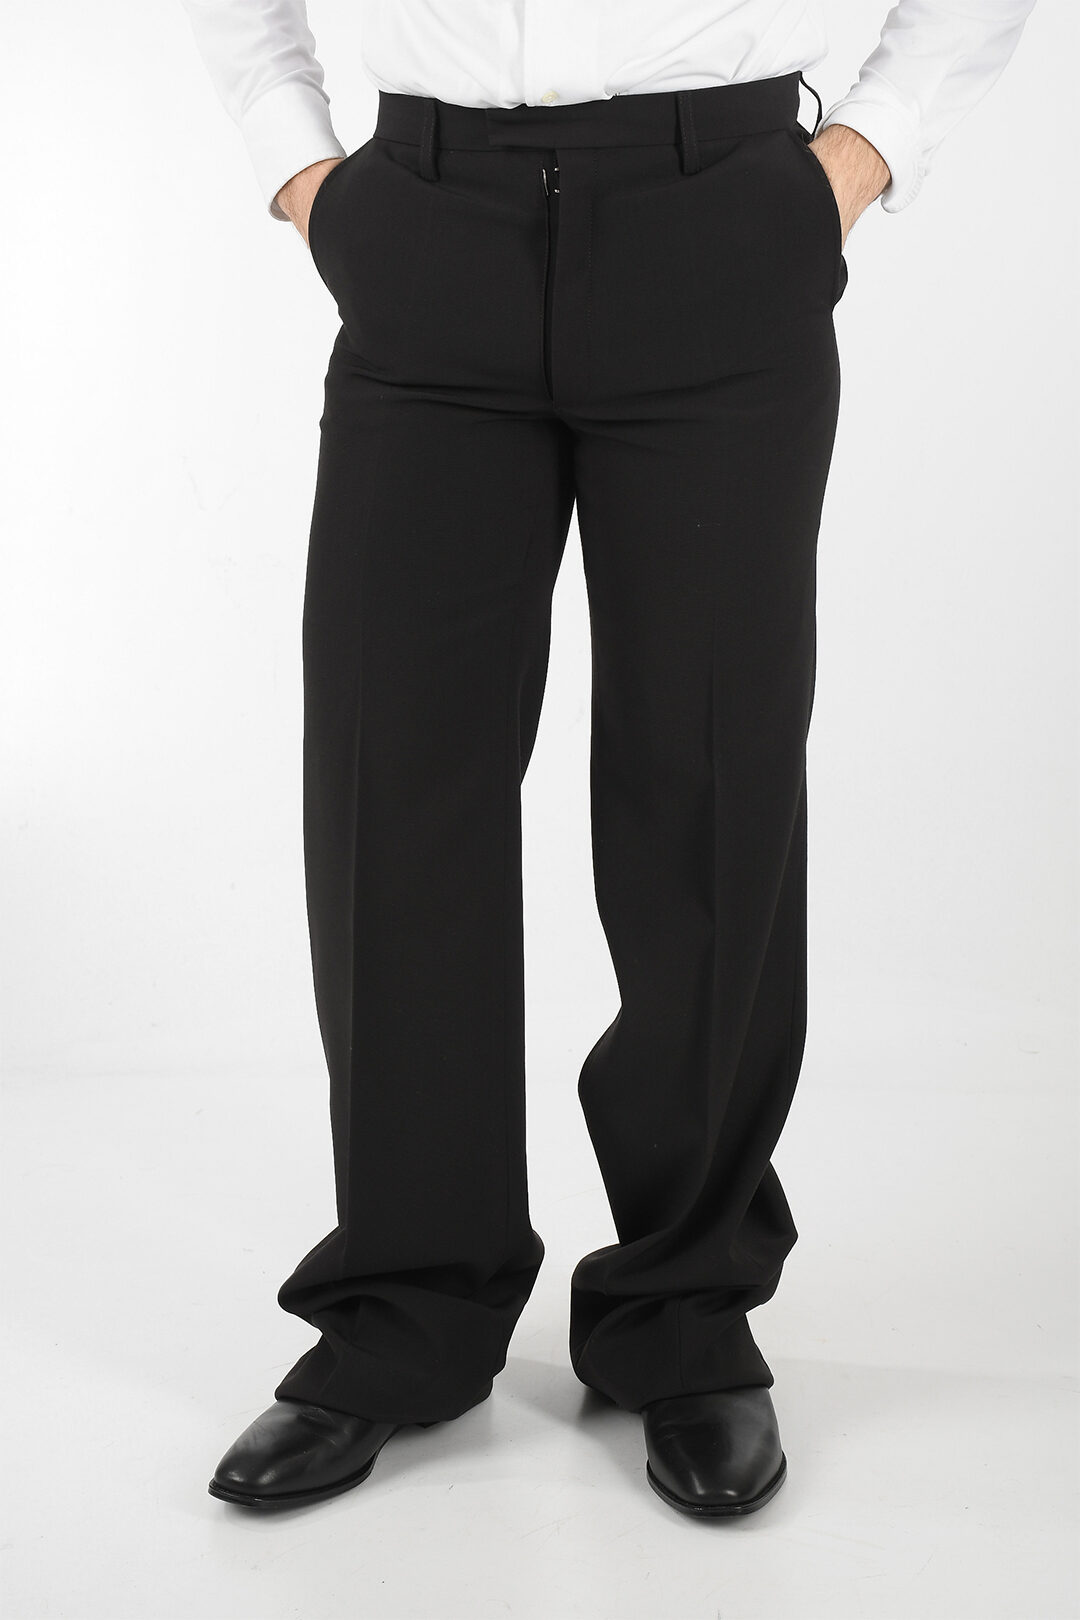 Maison Margiela MM10 One Button Suit with Wide Leg Pants men - Glamood  Outlet